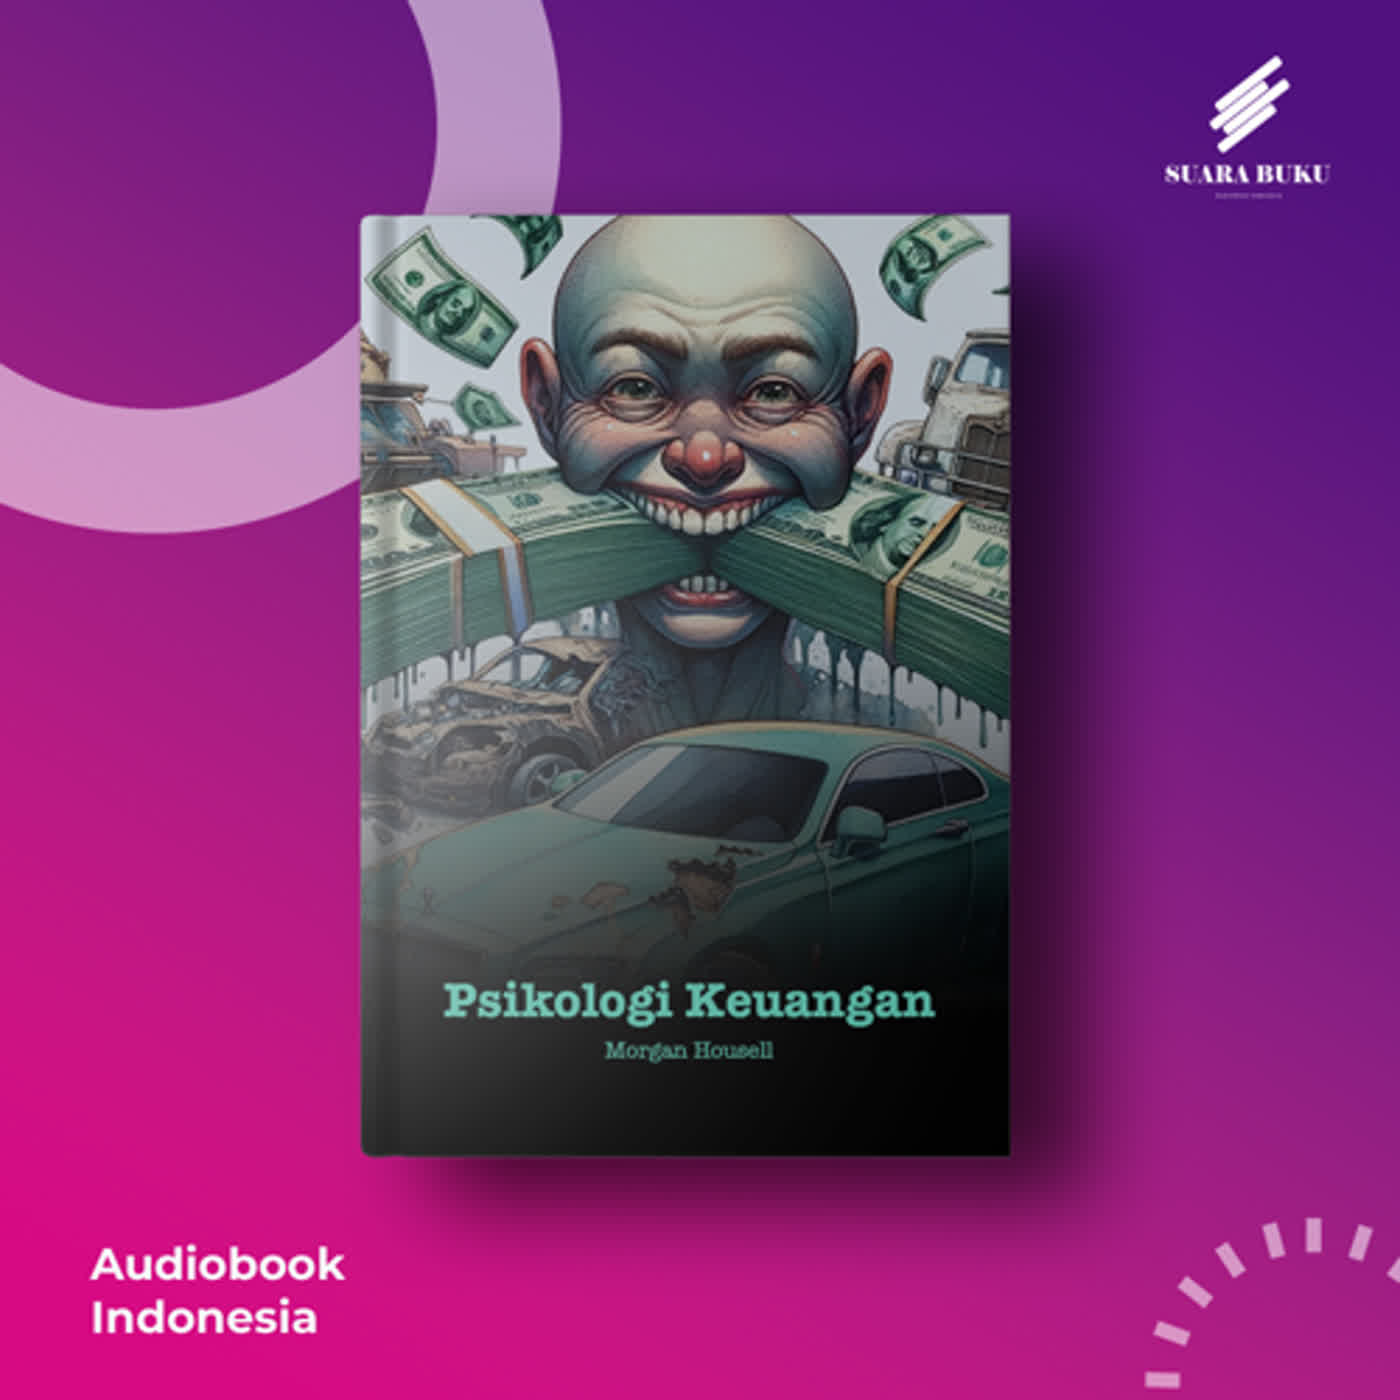 #1 Psikologi Keuangan Karya Morgan Housell - Audiobook Indonesia Suara Buku